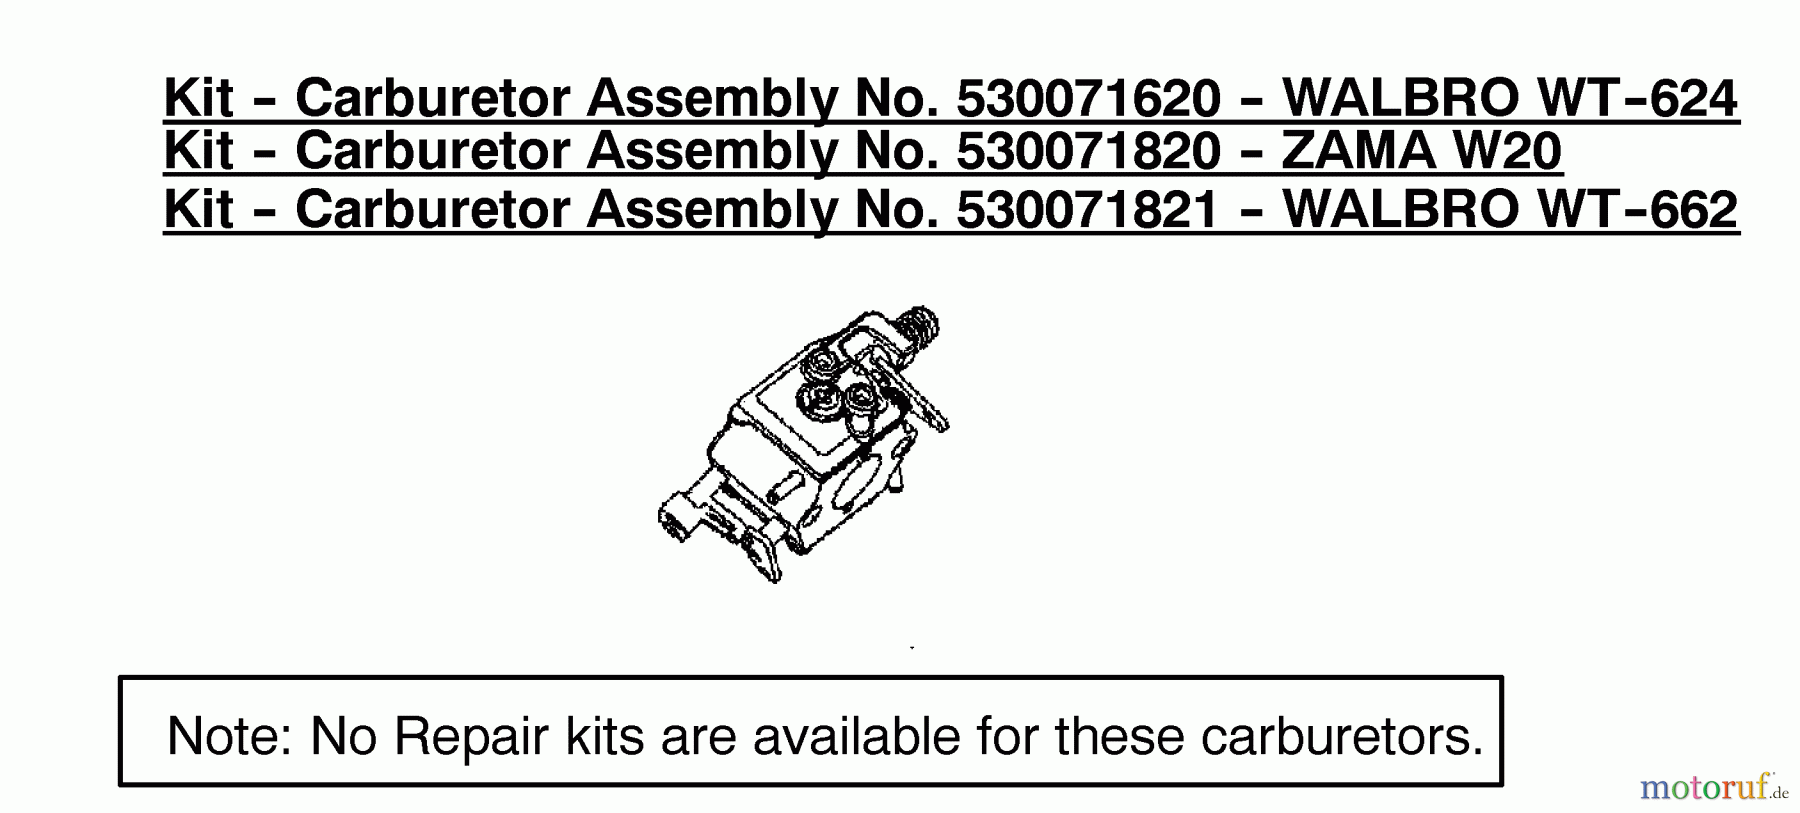  Poulan / Weed Eater Motorsägen 2055 (Type 6) - Poulan Woodsman Chainsaw Kit - Carburetor Assembly 530071820/530071821/530071620